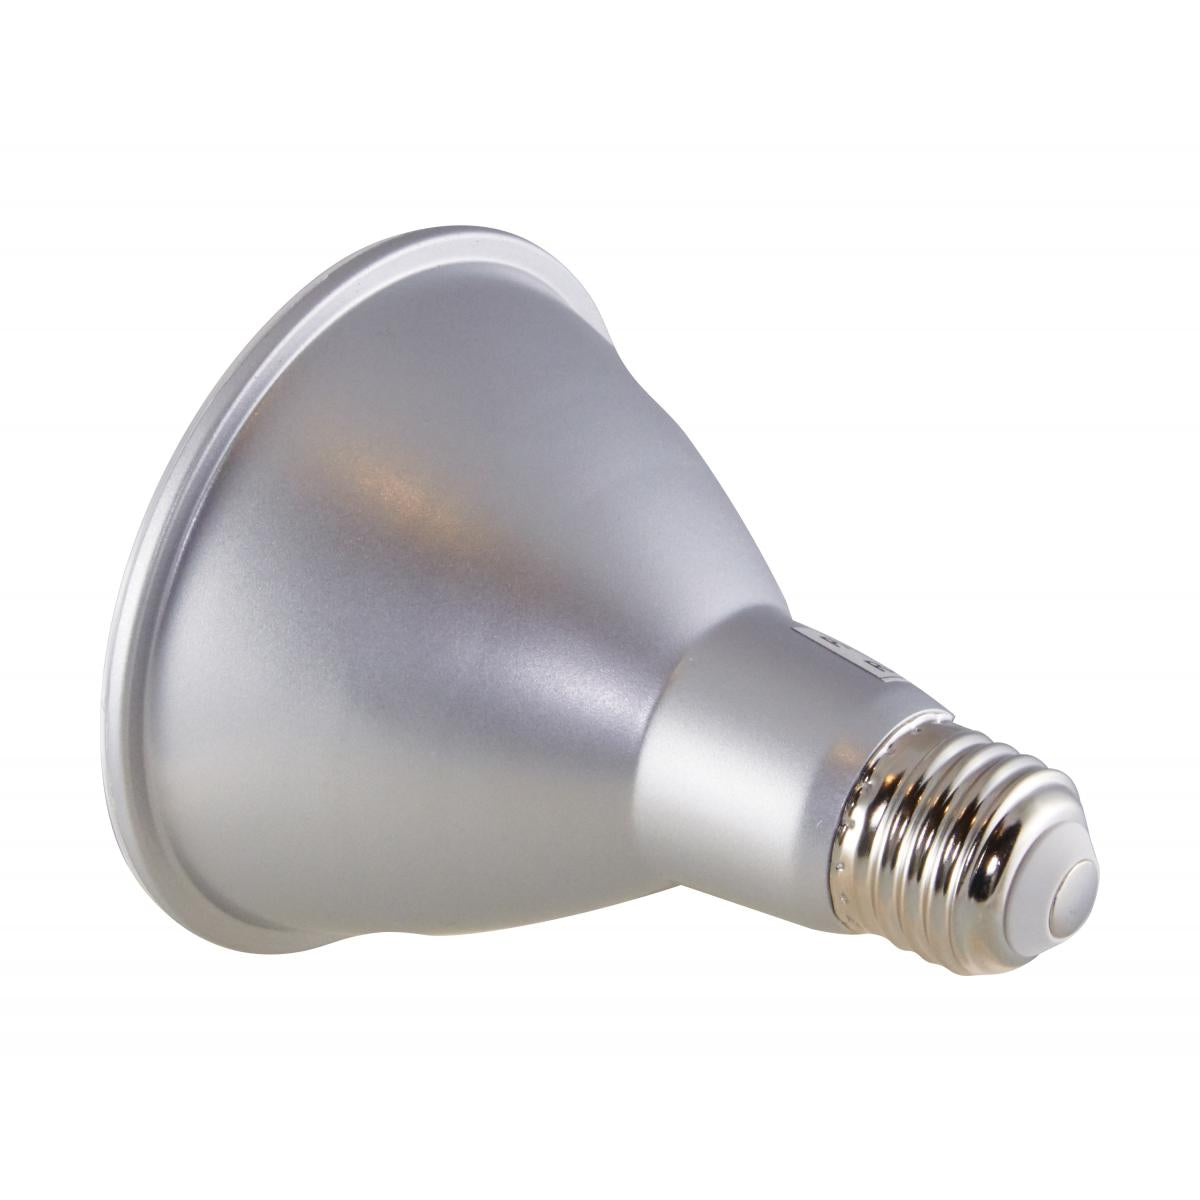 PAR30 Long Neck Reflector LED Bulb, 12 watt, 1000 Lumens, 2700K, E26 Medium Base, 25 Deg. Flood